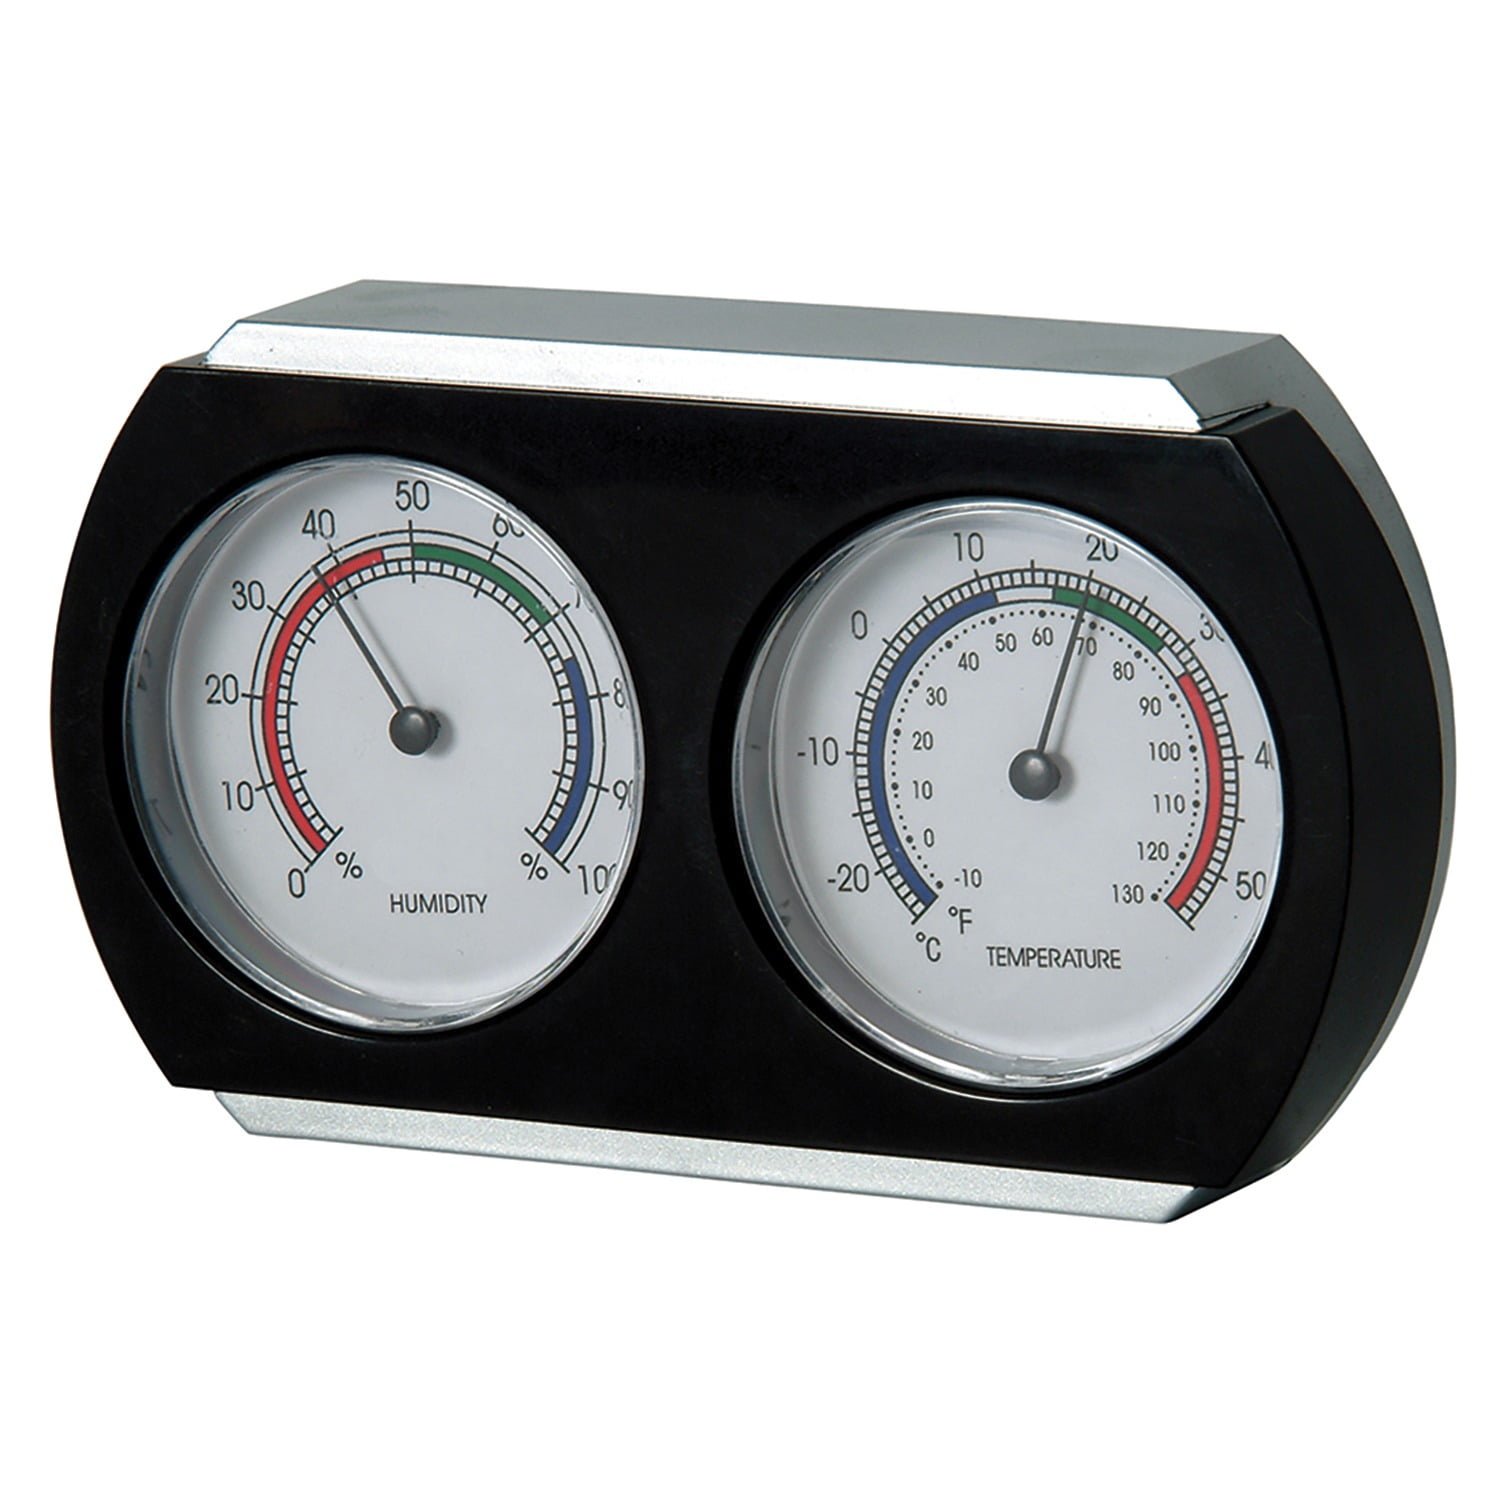 BIOSA Digital Baby Room Thermometer Meter Indoor Home Temperature Gauges (A)